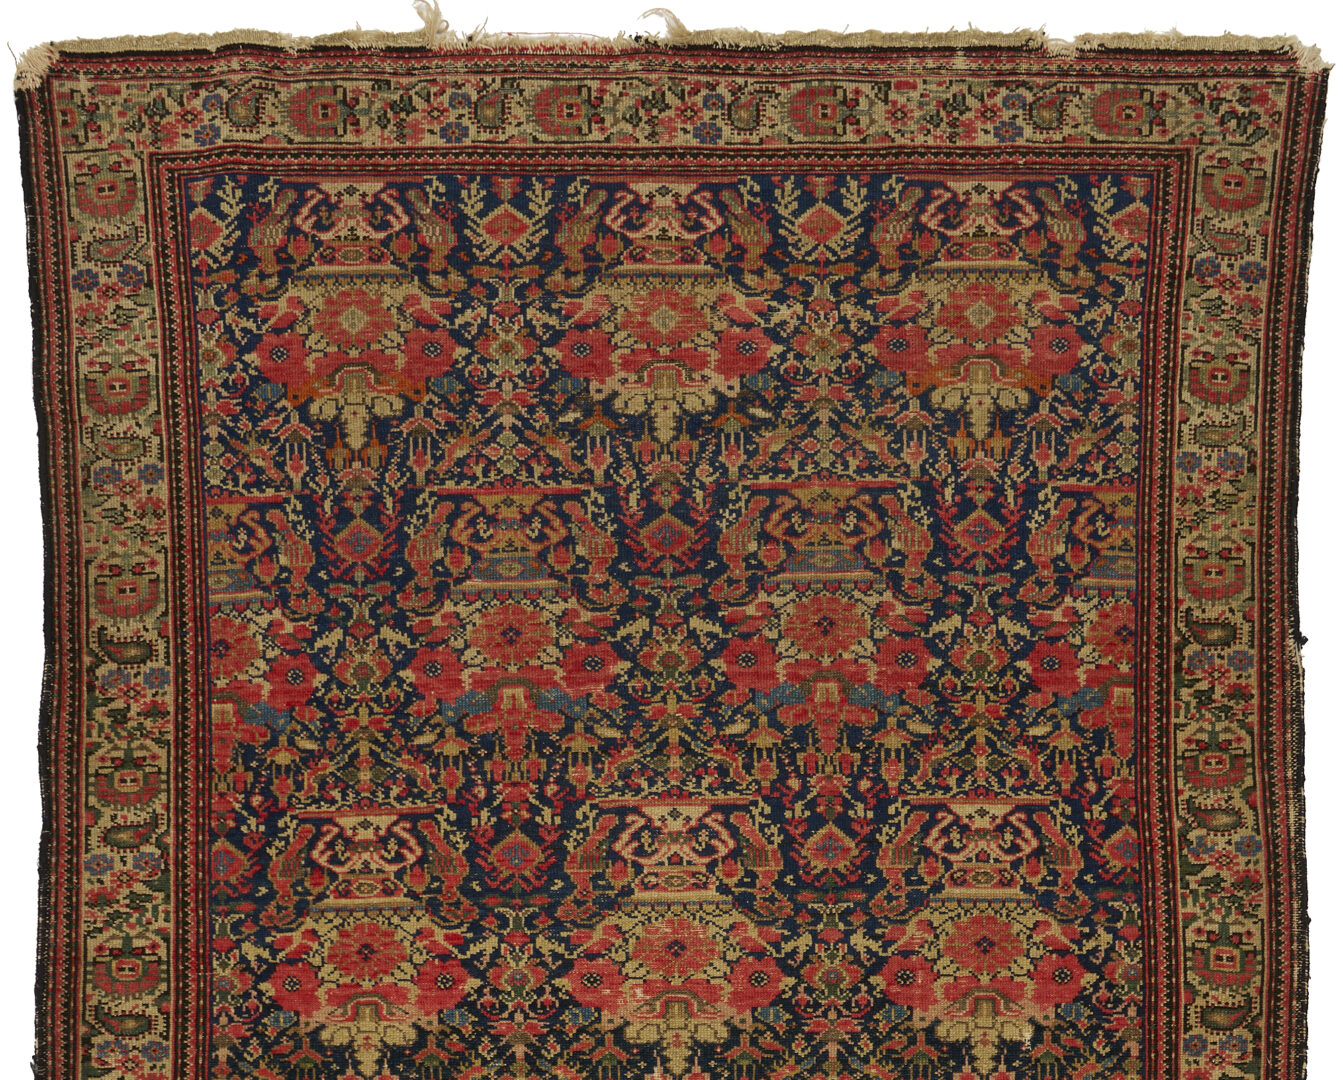 Lot 384: Persian Area Rug, Flowering Urn Design; Approx. 6' x 4'